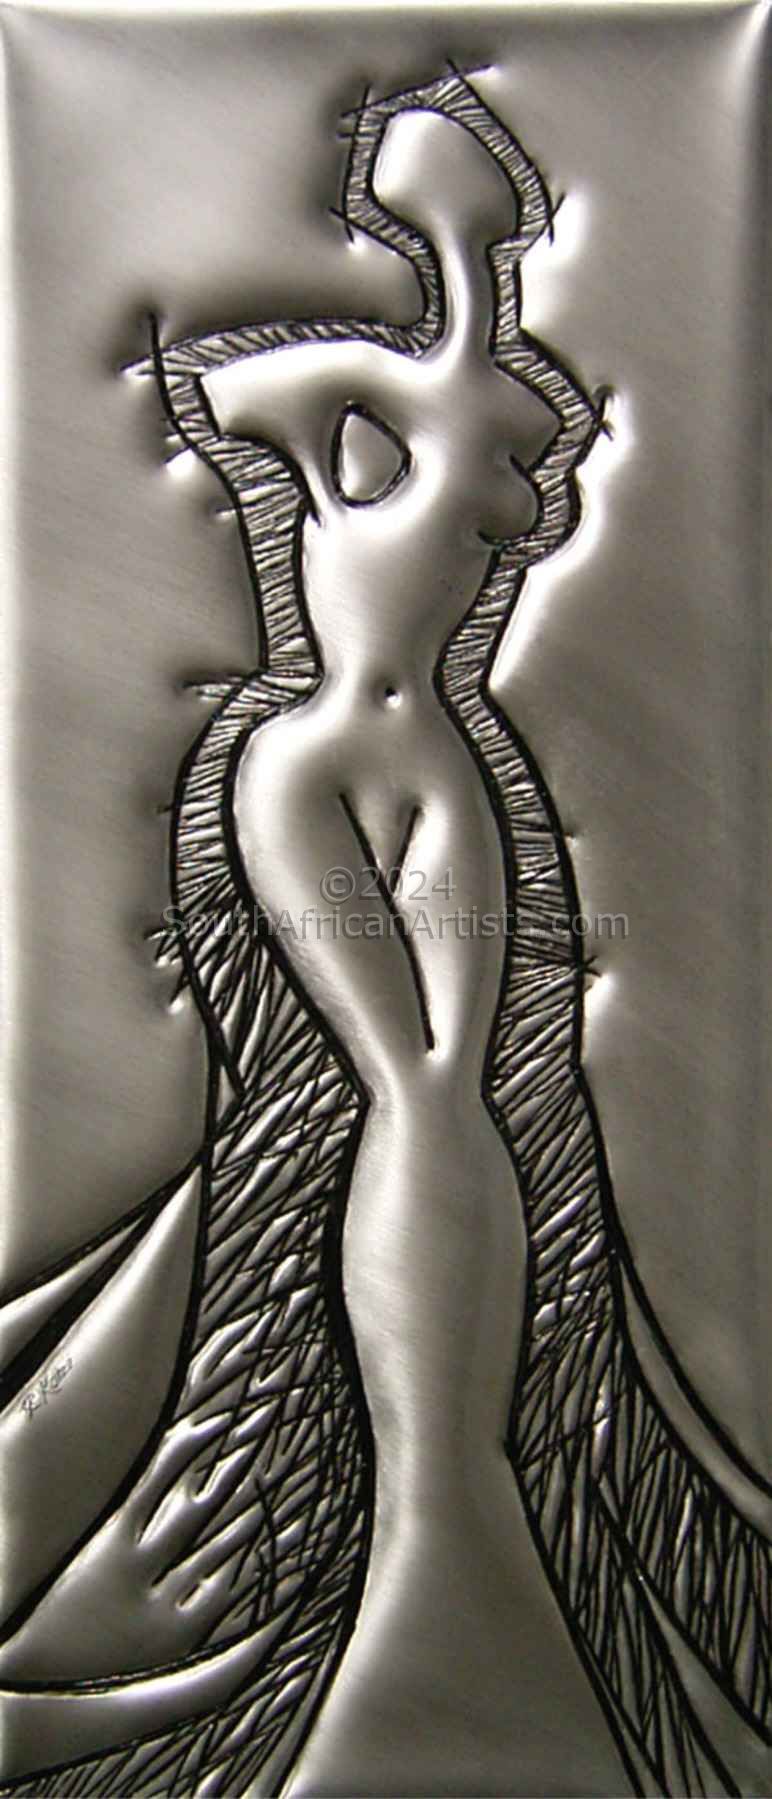 Female Figure 1 in Metal Sculpture 1/1